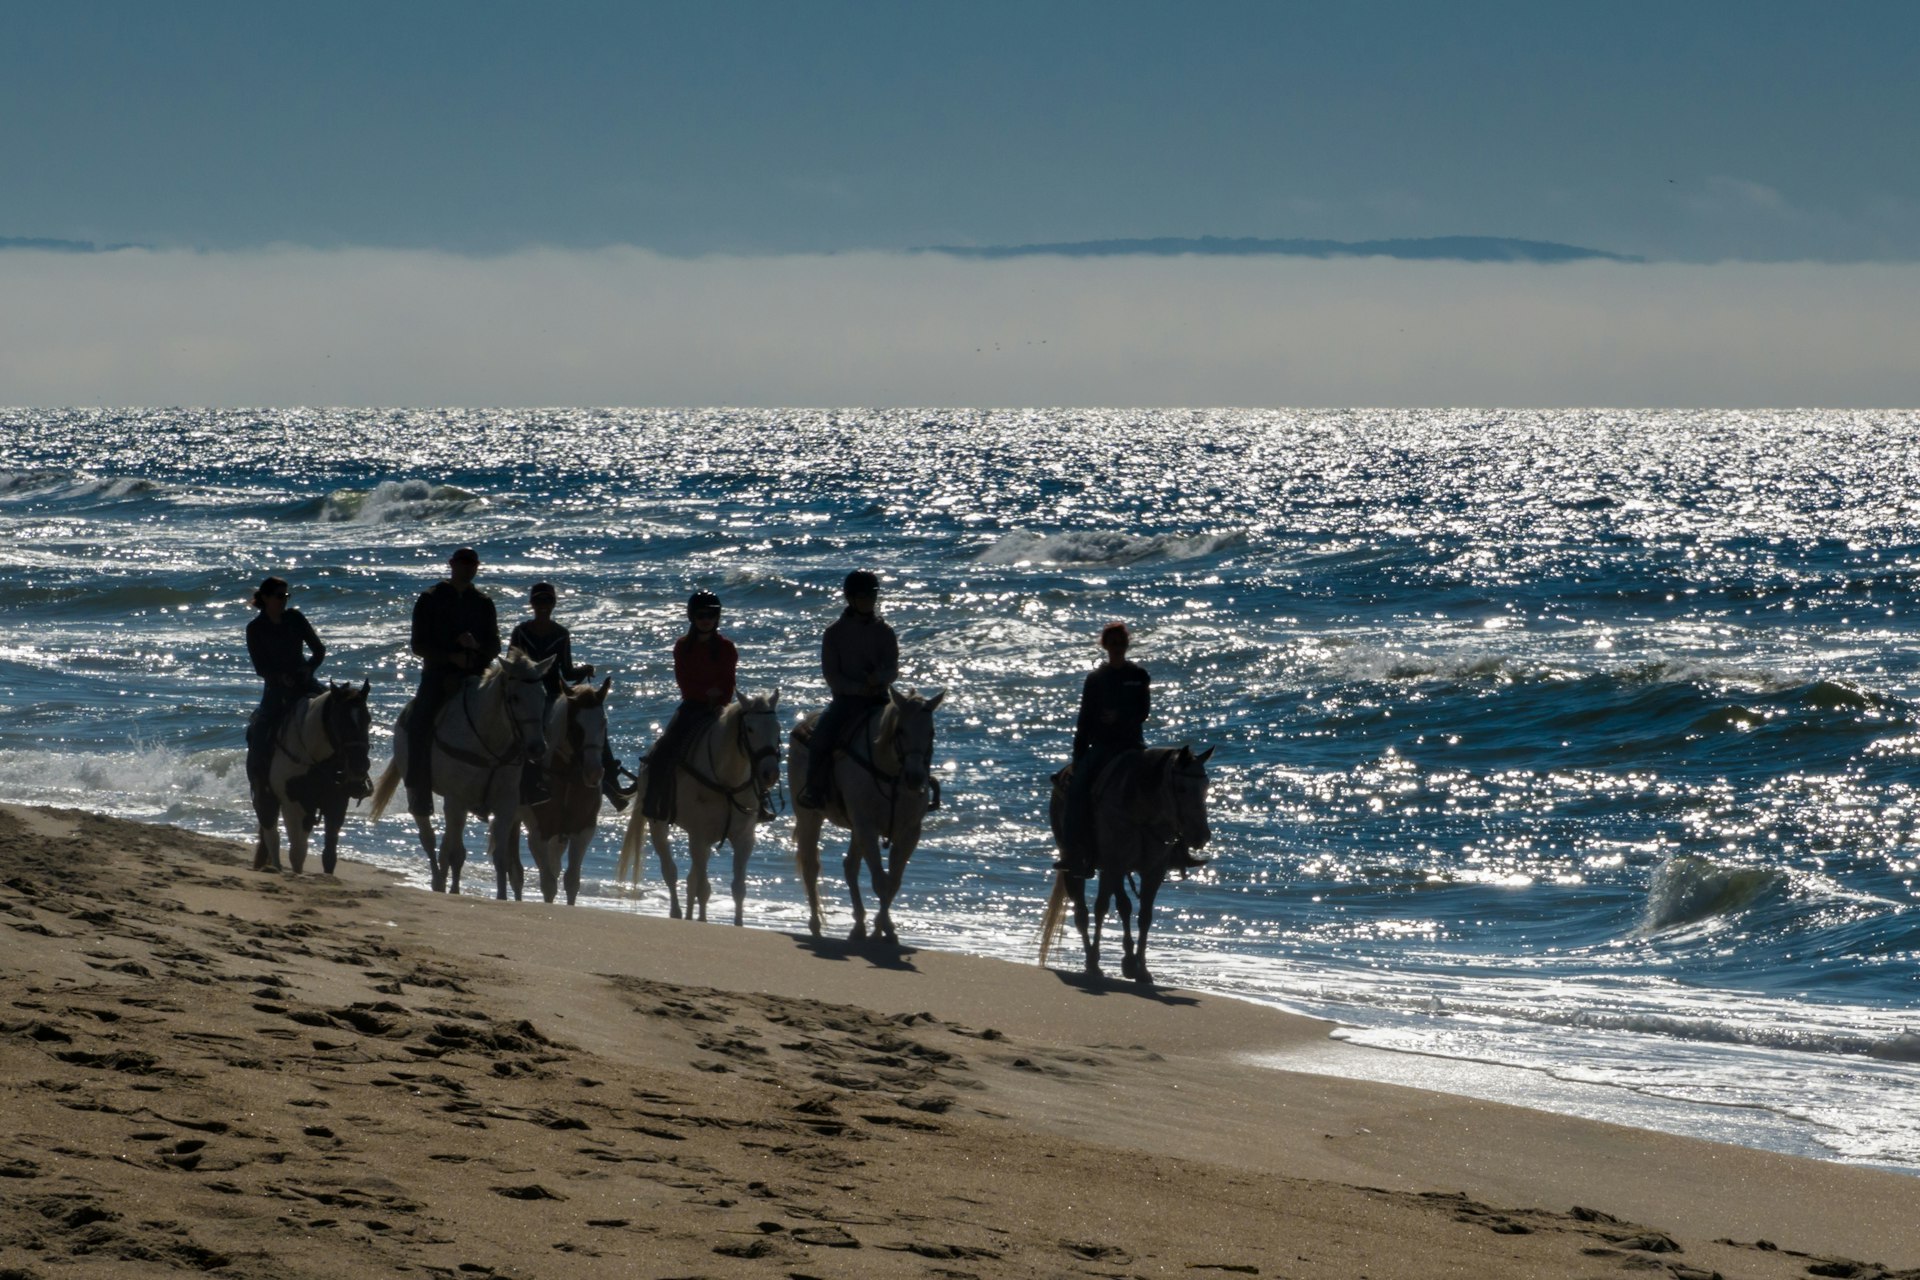 Horseback riders on a beach in Monterey Bay